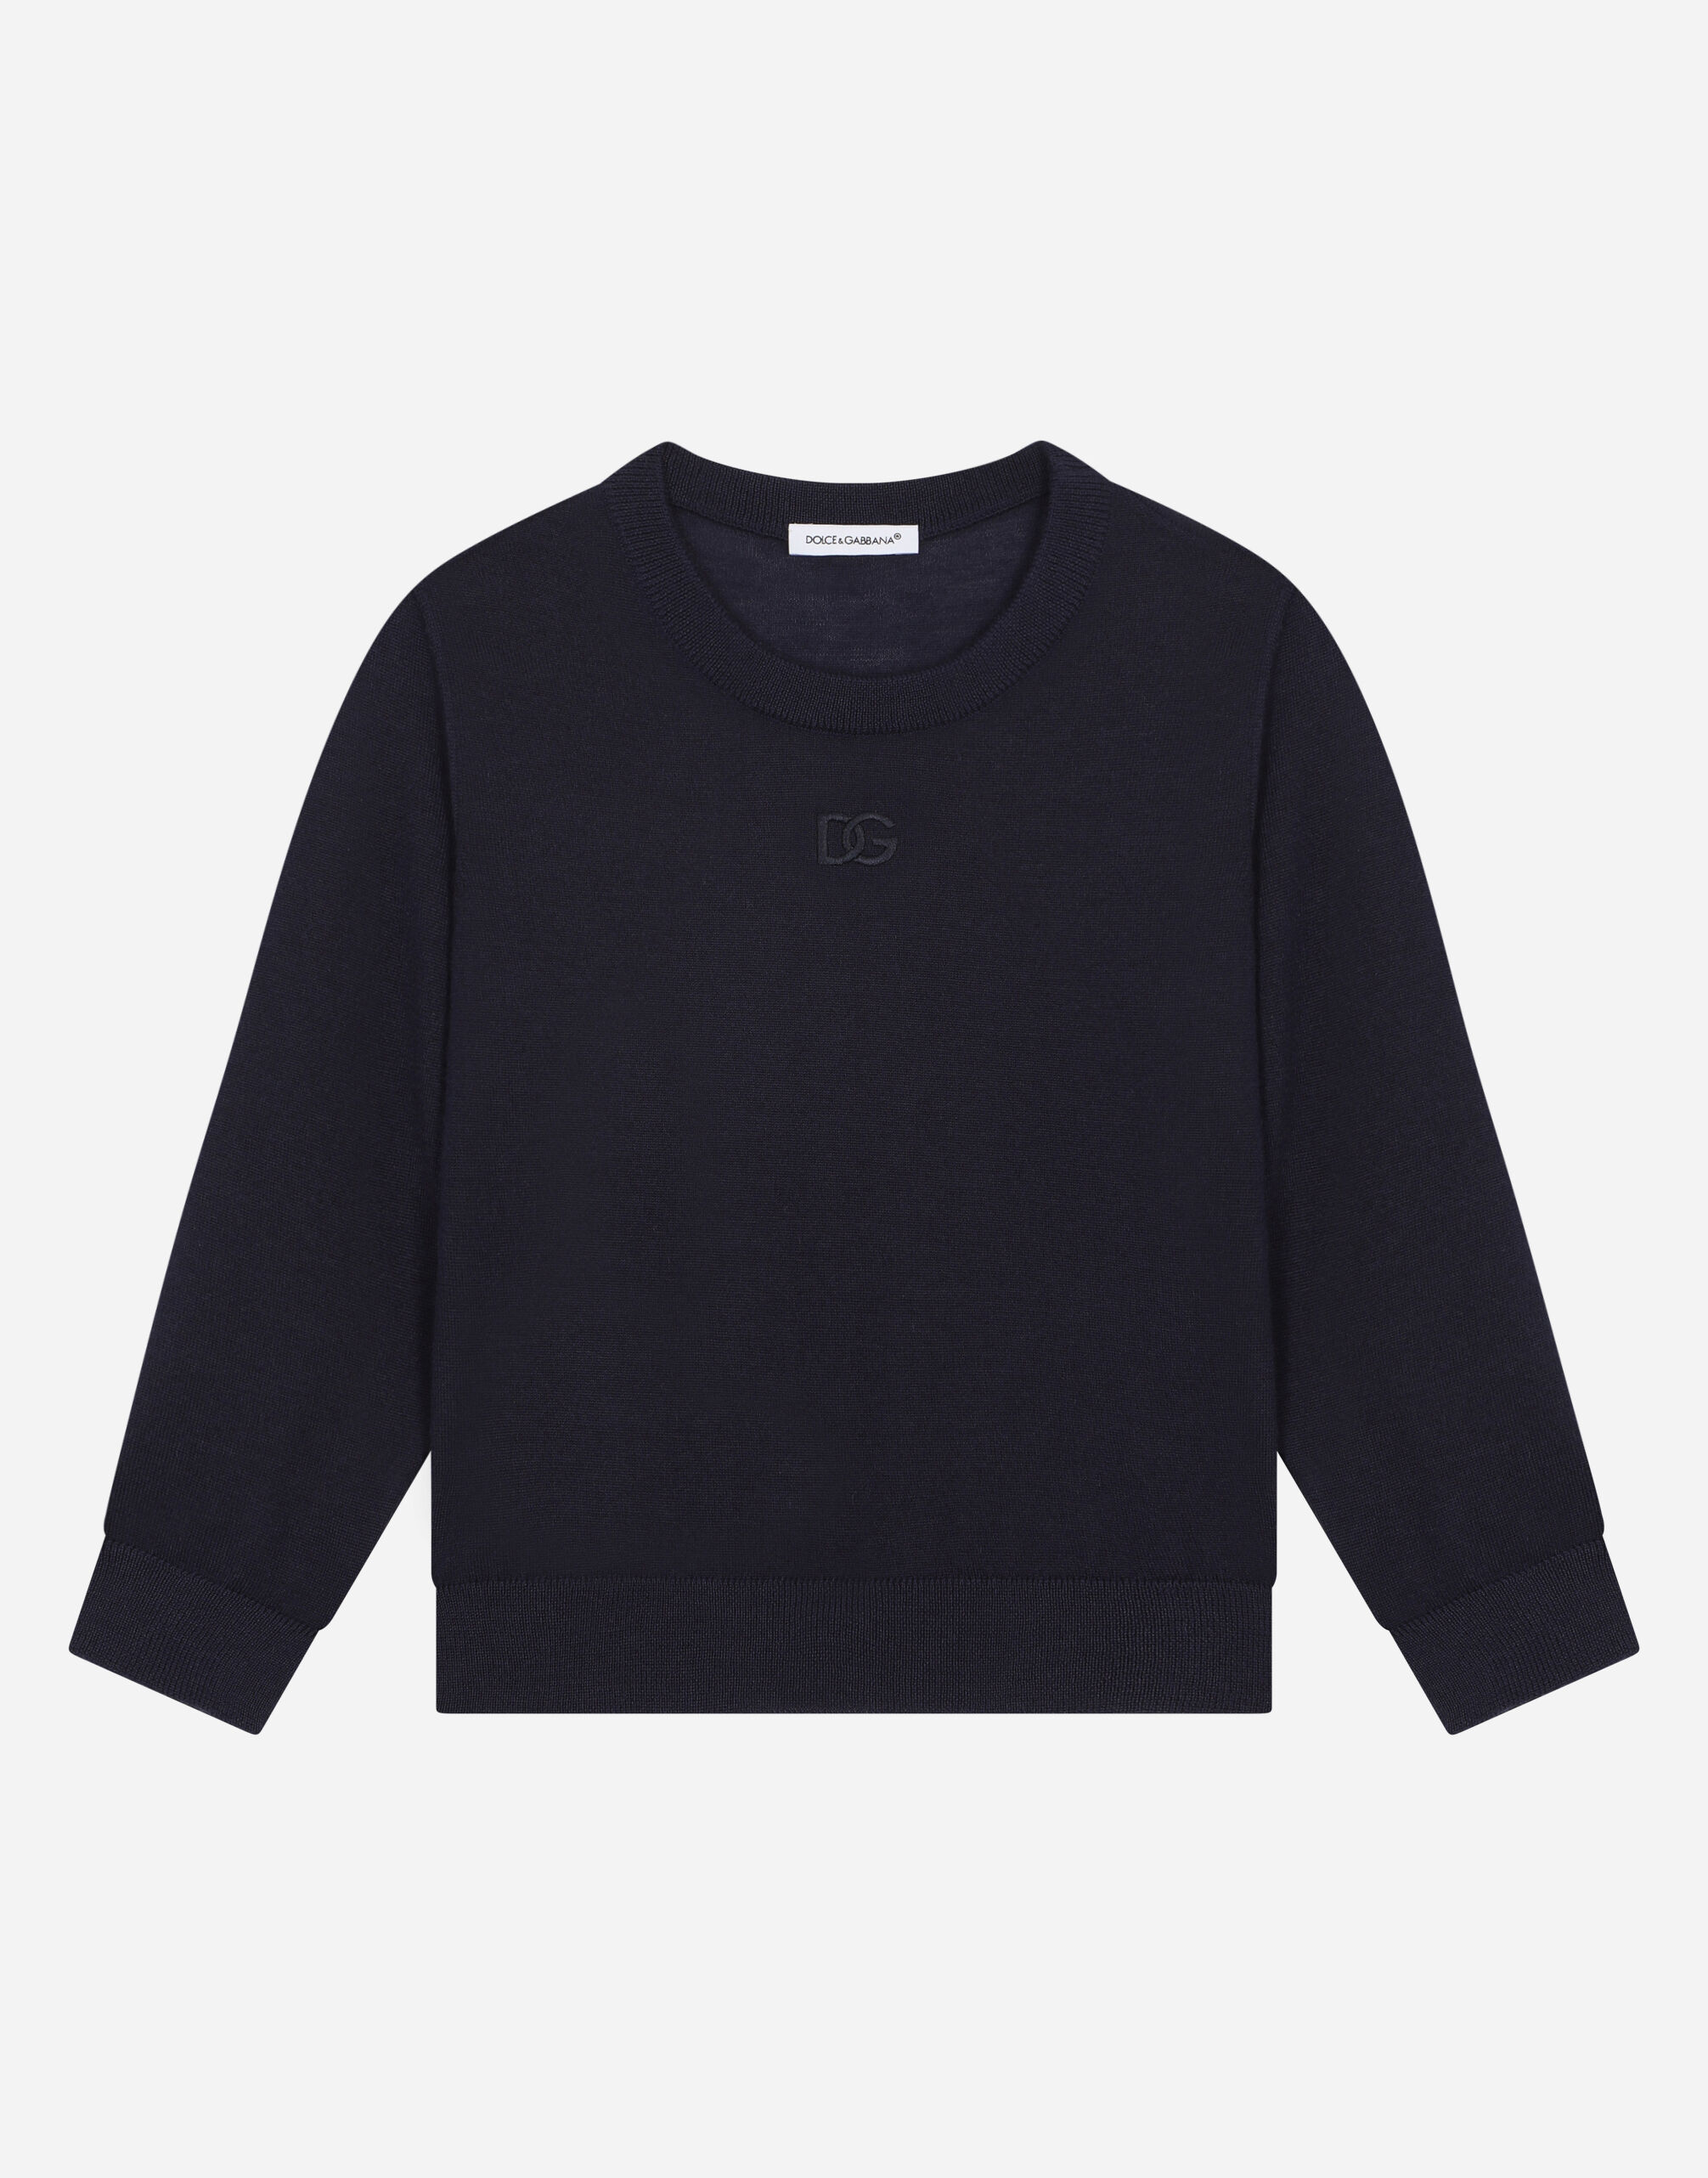 Dolce & Gabbana Cashmere round-neck sweater with DG logo embroidery Negro L4KWE1JCVR9